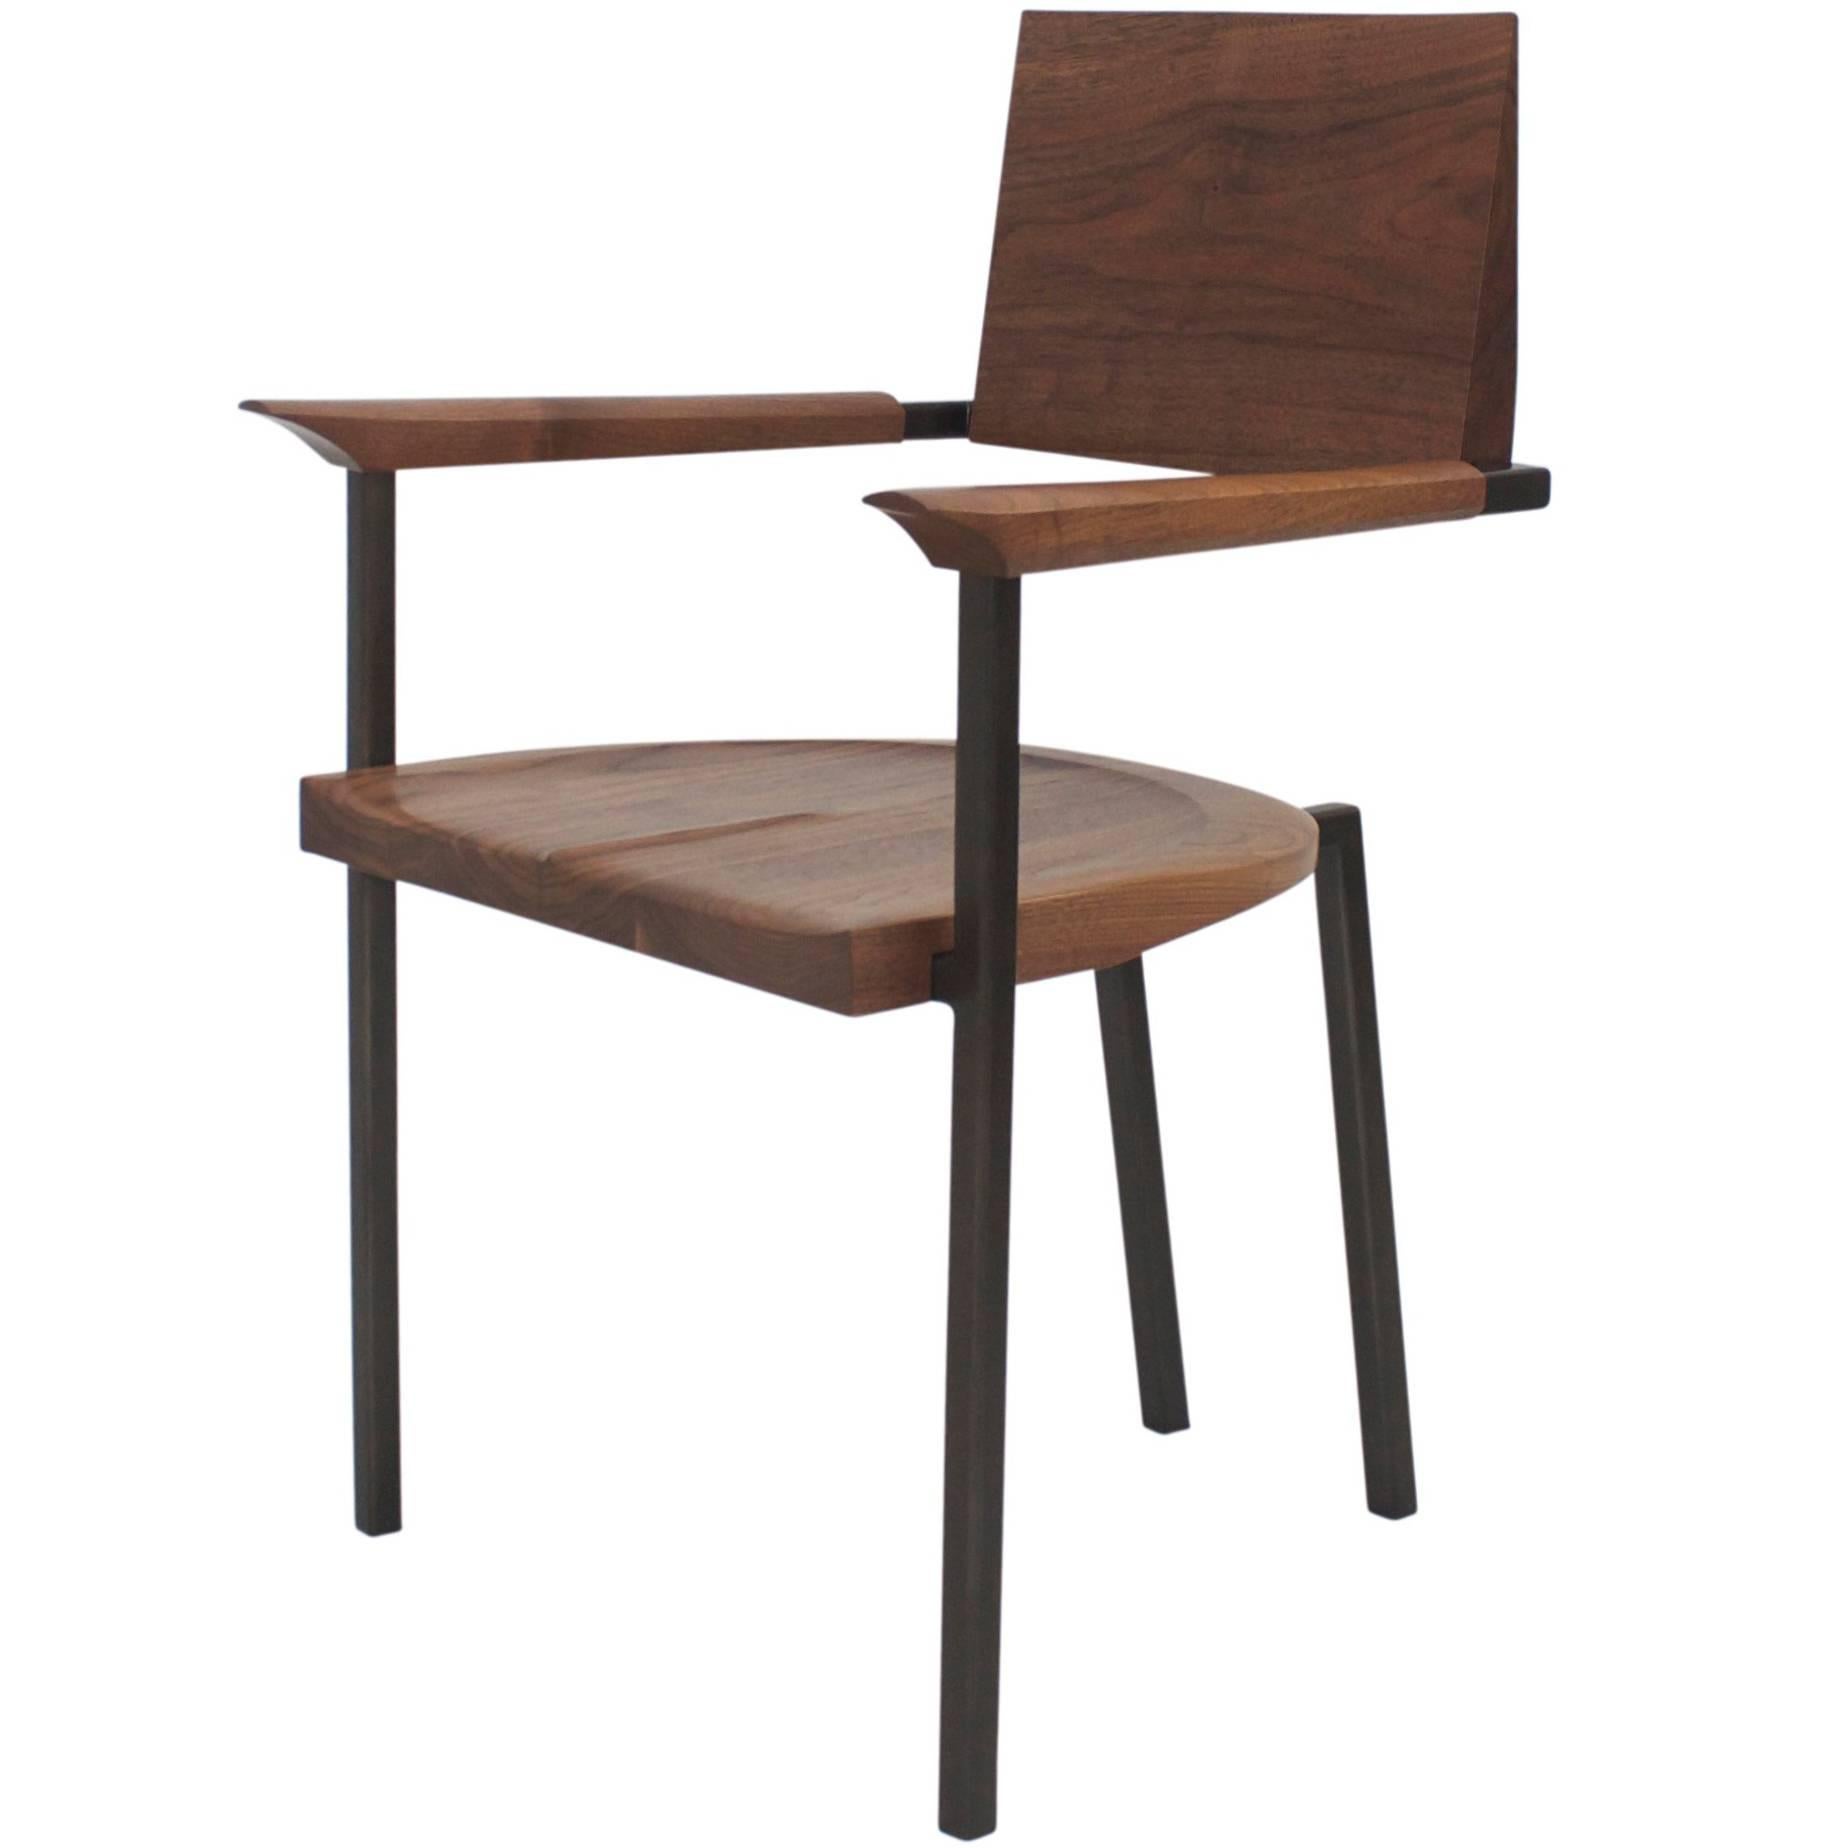 Blackened Steel, Solid Wood "Steel Chair" Hand-Shaped, Walnut, Charred Ash